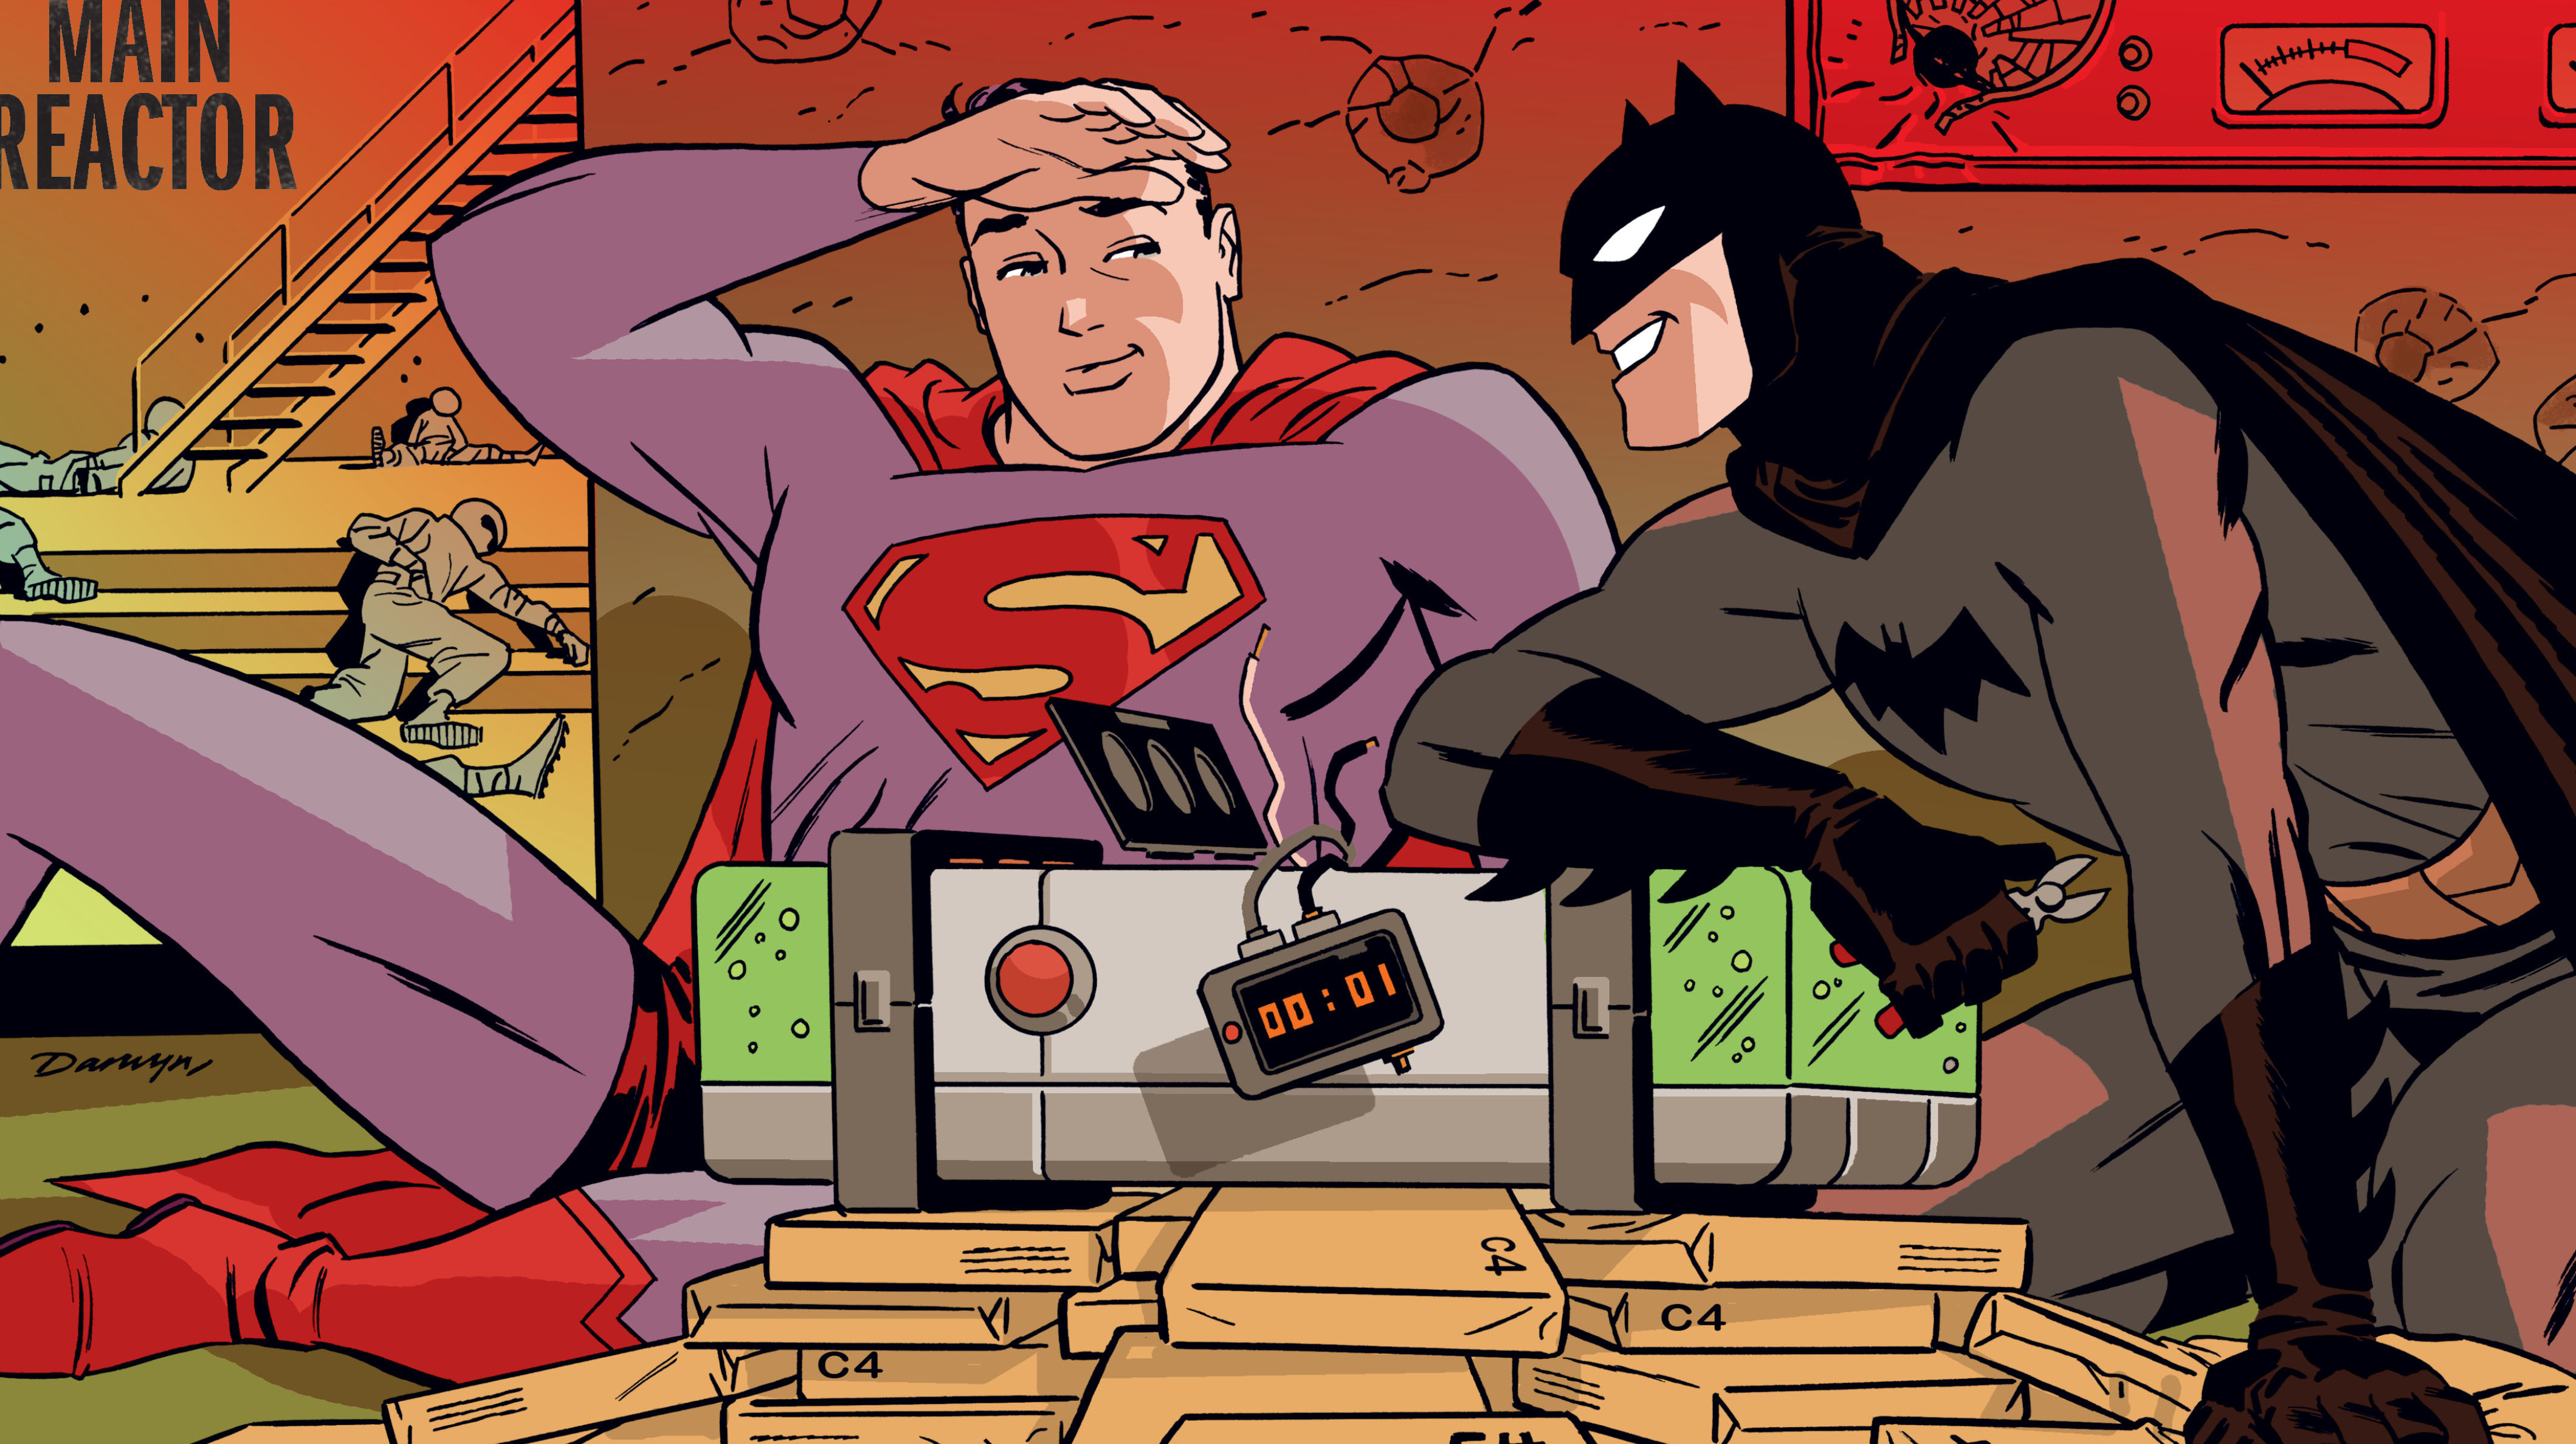 Скачать обои бесплатно Комиксы, Бэтмен, Комиксы Dc, Супермен, Брюс Уэйн, Кларк Кент, Бэтмен/супермен картинка на рабочий стол ПК